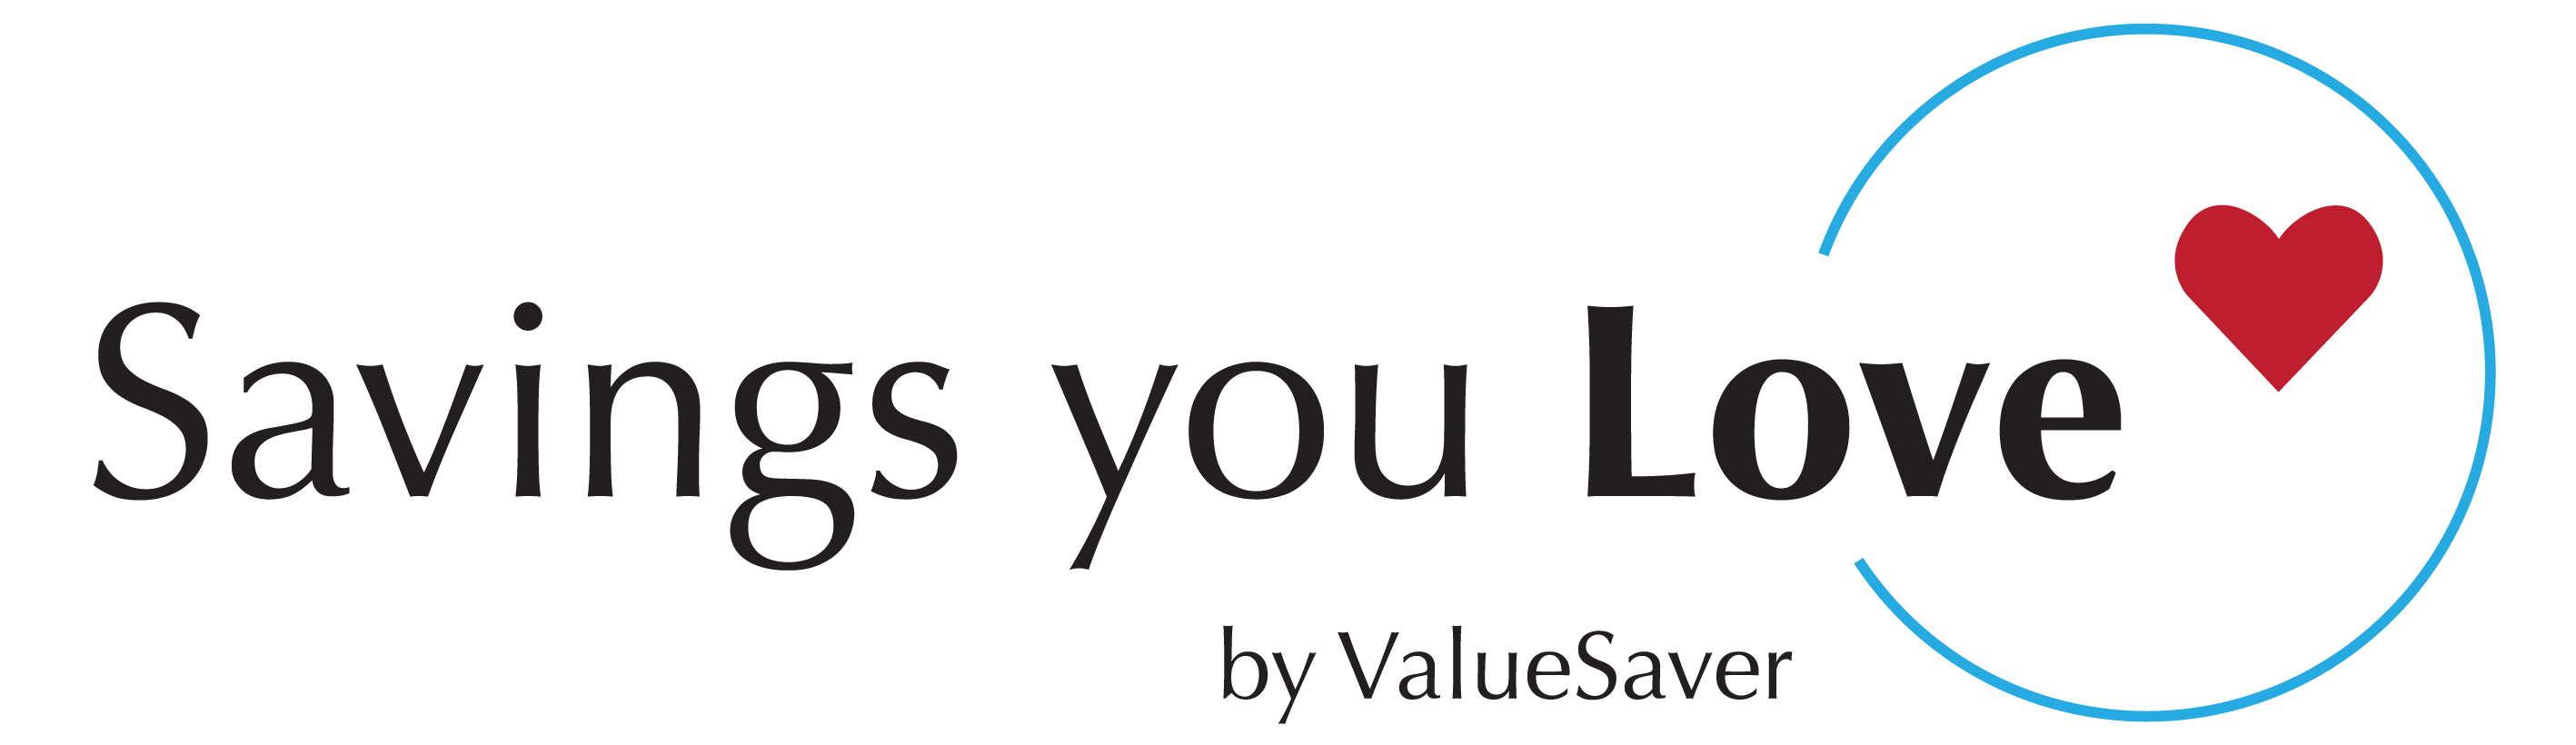 ValueSaver - Savings You Love